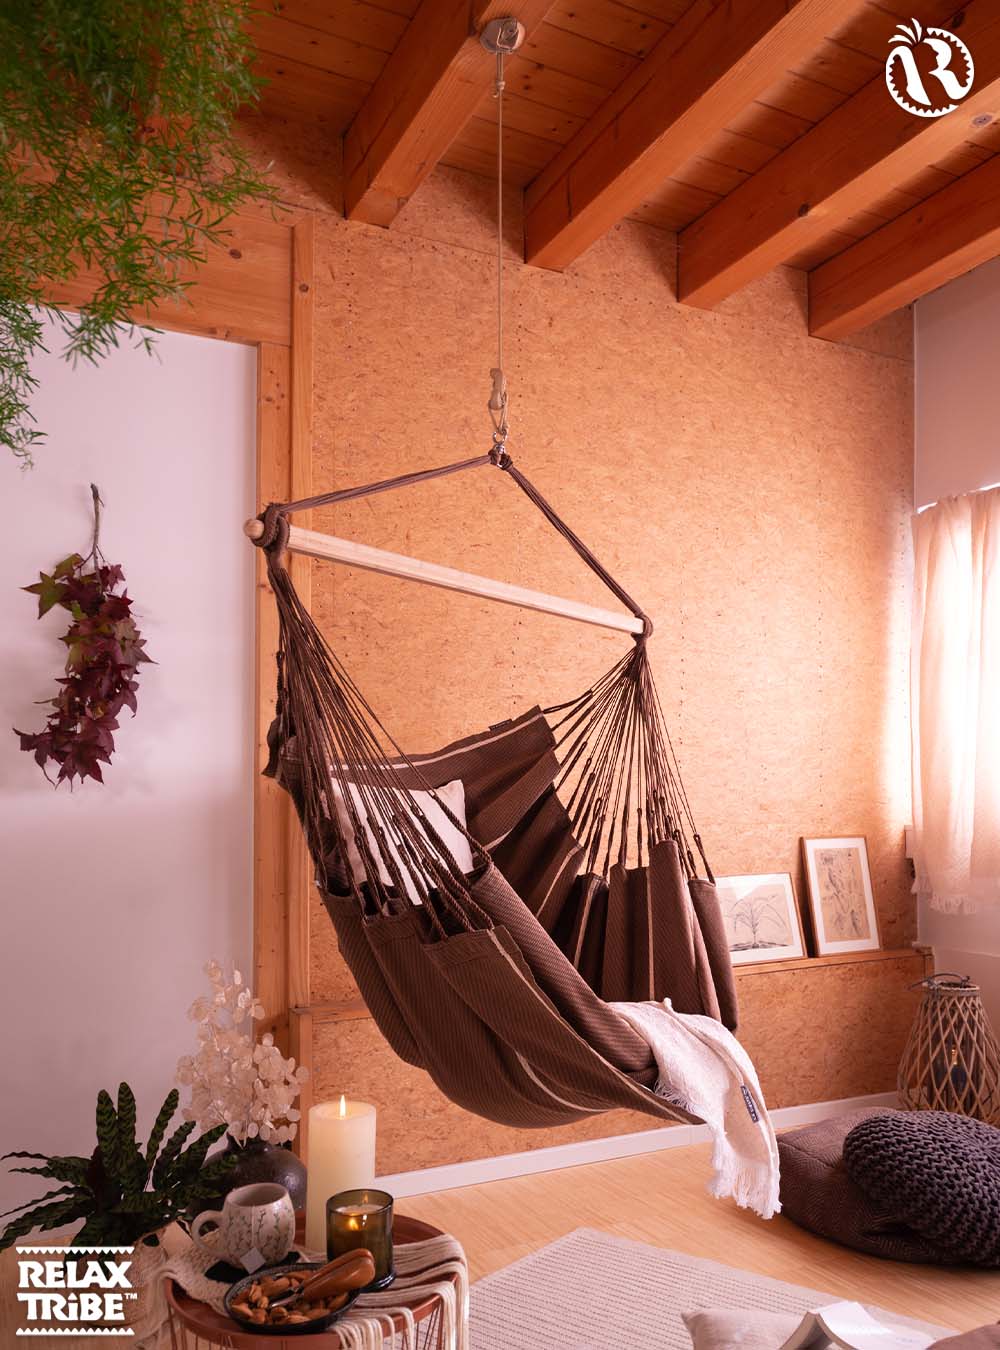 habana-chocolate-double-kingsize-xl-eco-lounger-hammock-chair-pure-organic-cotton-fsc-wood-handmade-brown-indoor-ceiling